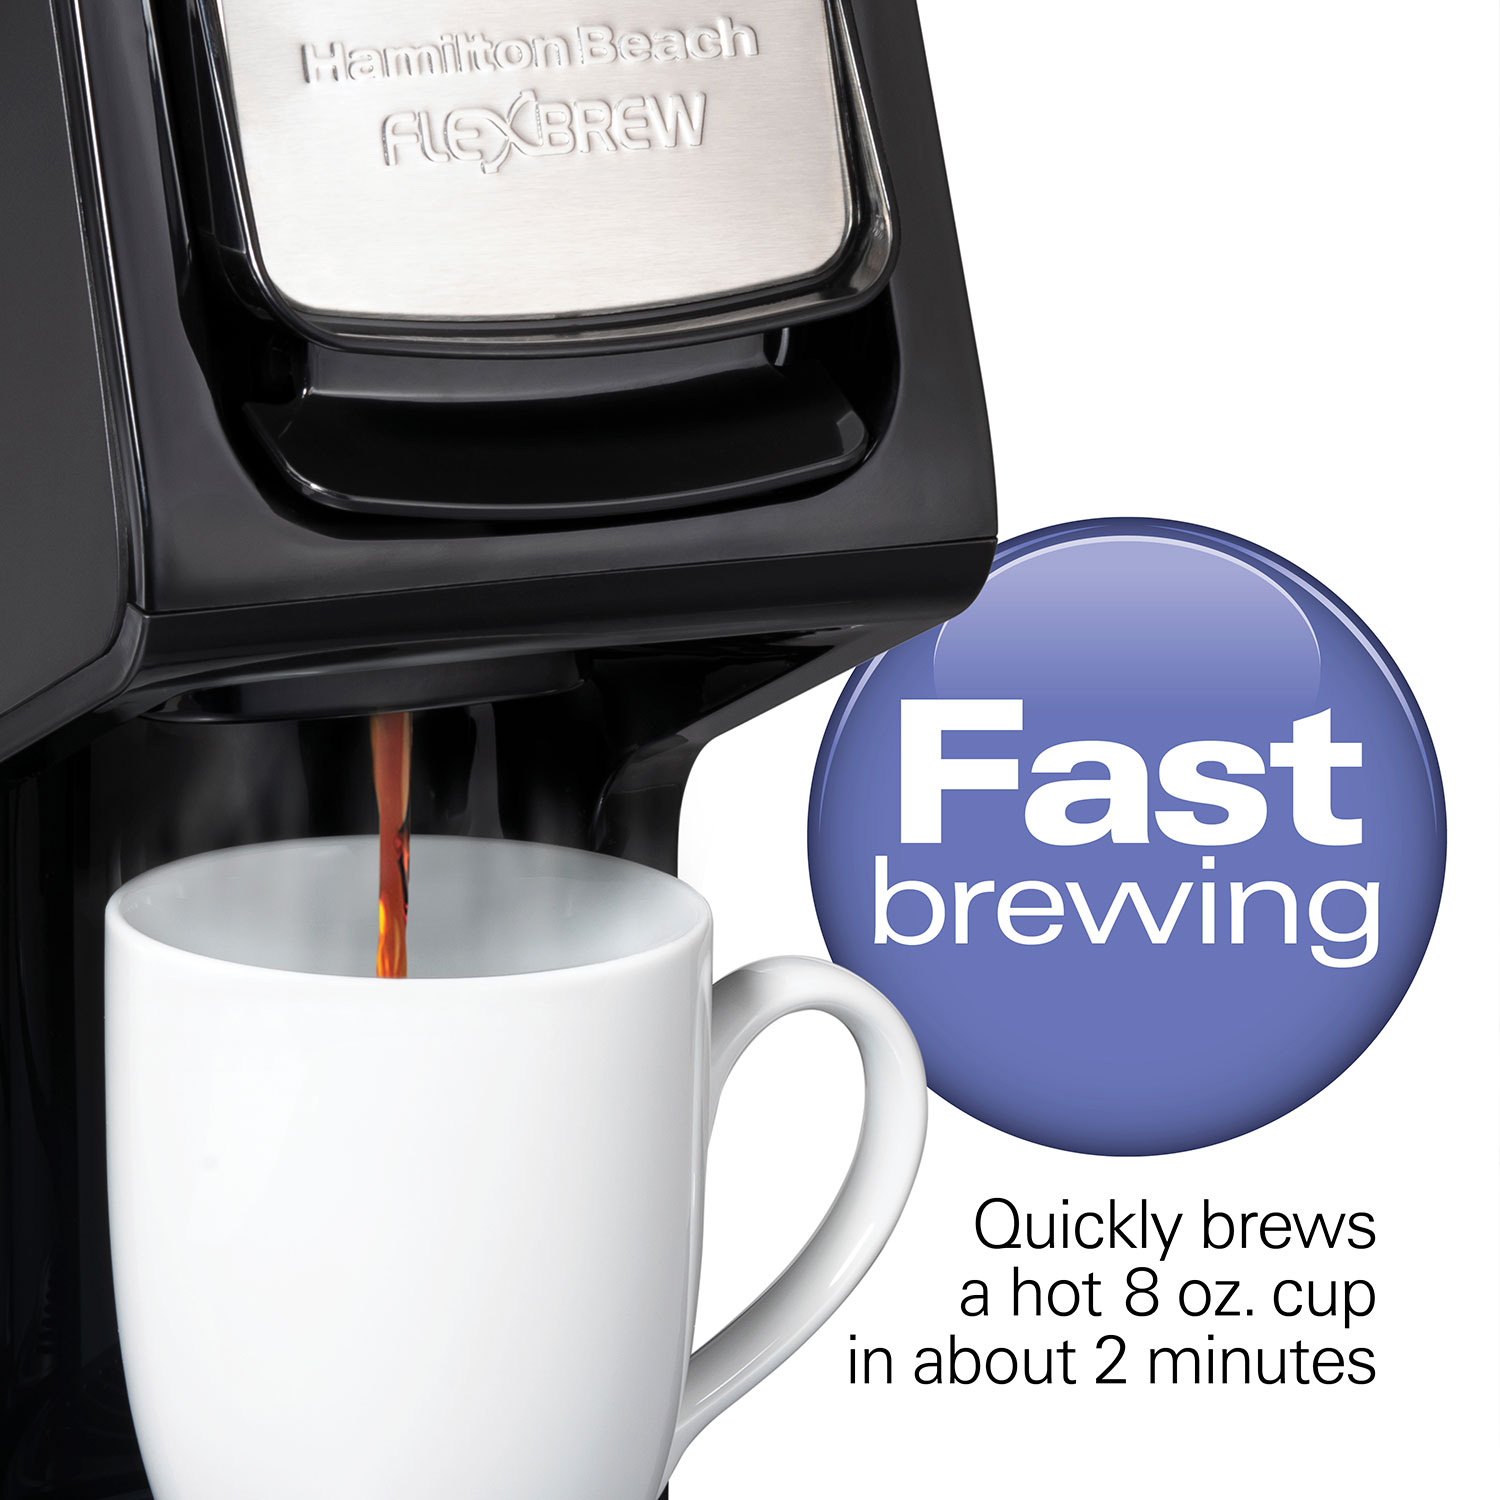 Hamilton Beach Flexbrew Dual Function Single Serve Coffee Maker